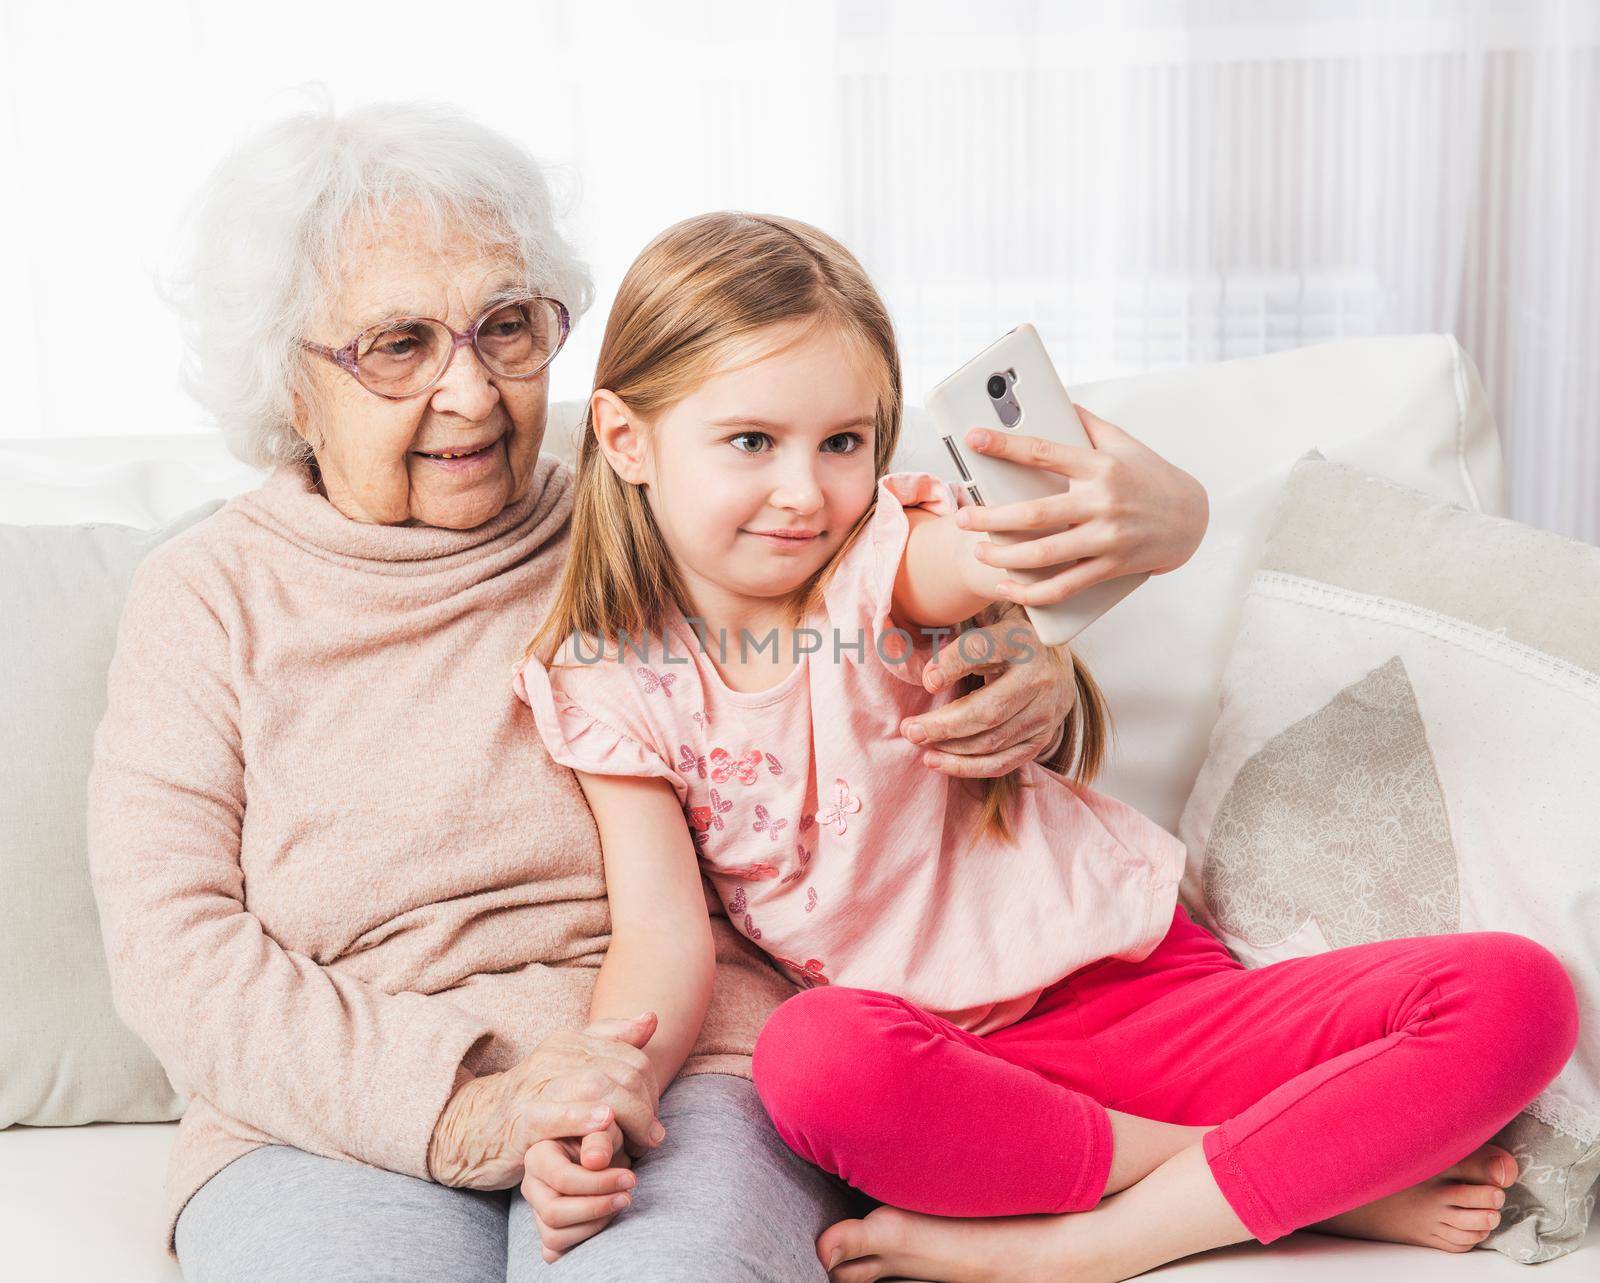 Granddaughter taking selfie with great-grandmother by tan4ikk1